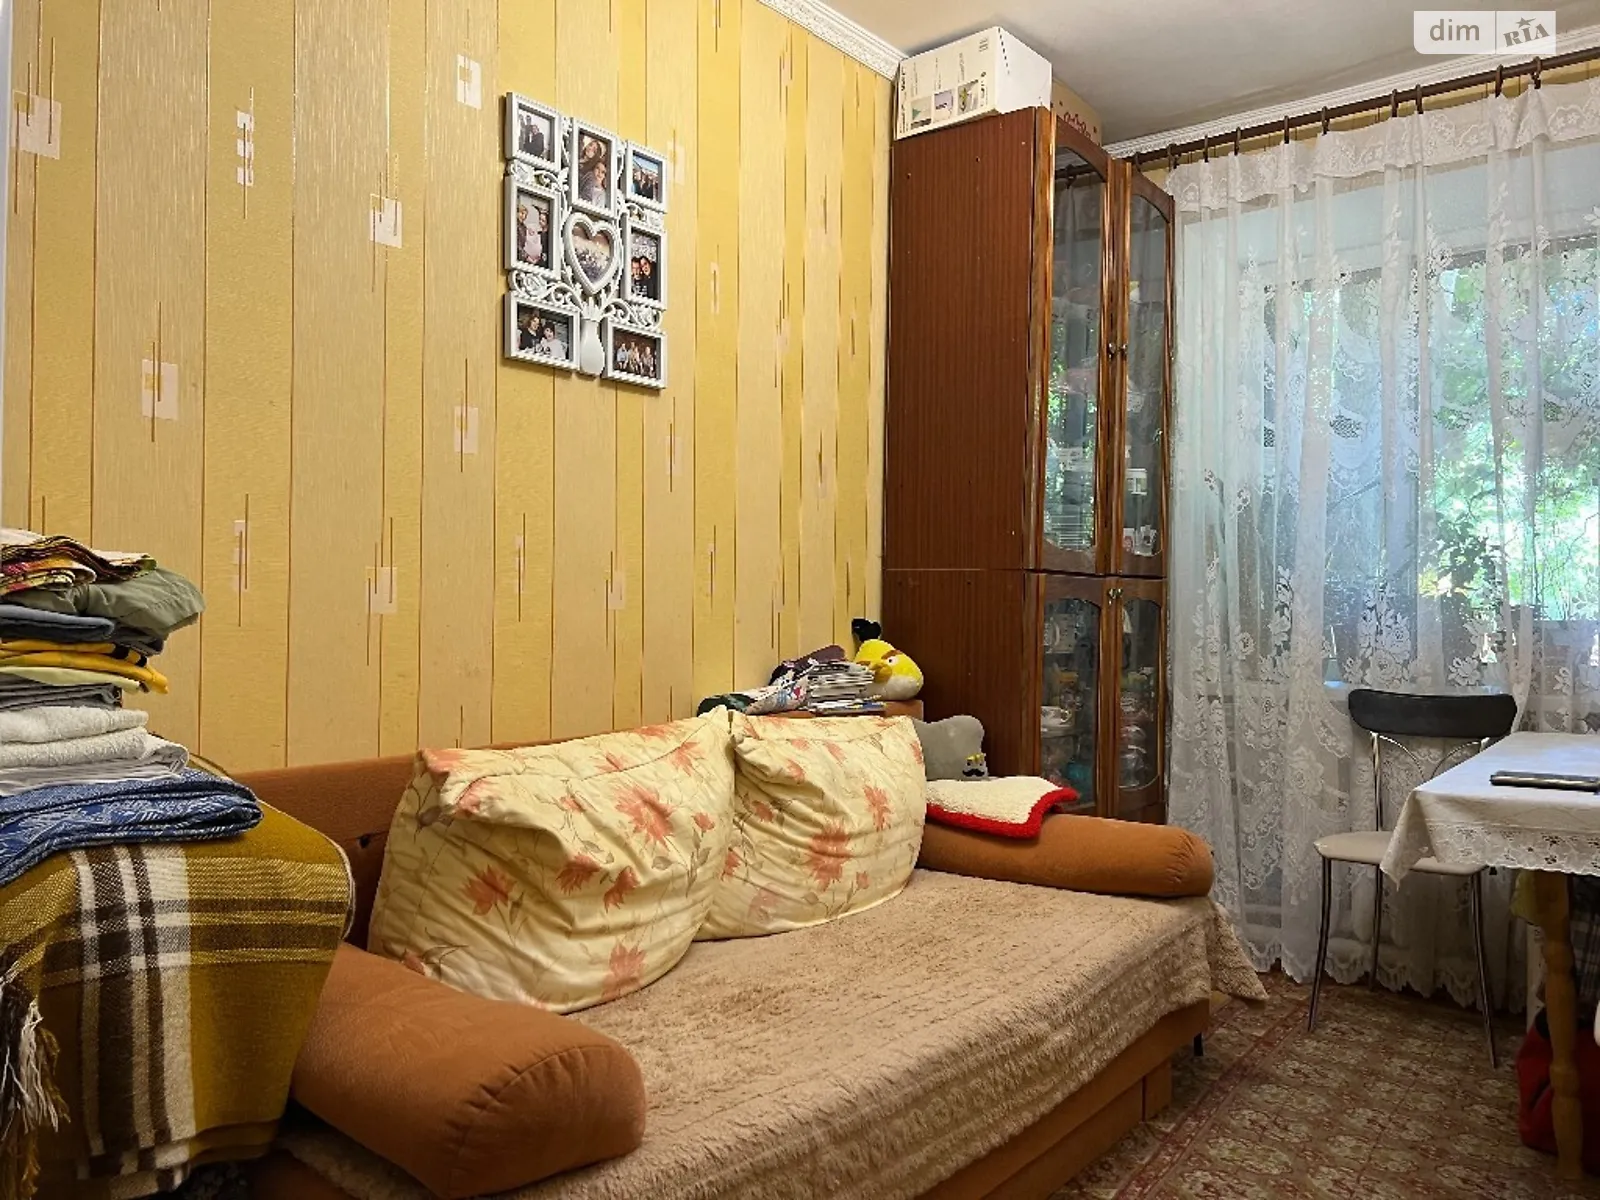 Продается комната 10 кв. м в Одессе, цена: 7000 $ - фото 1